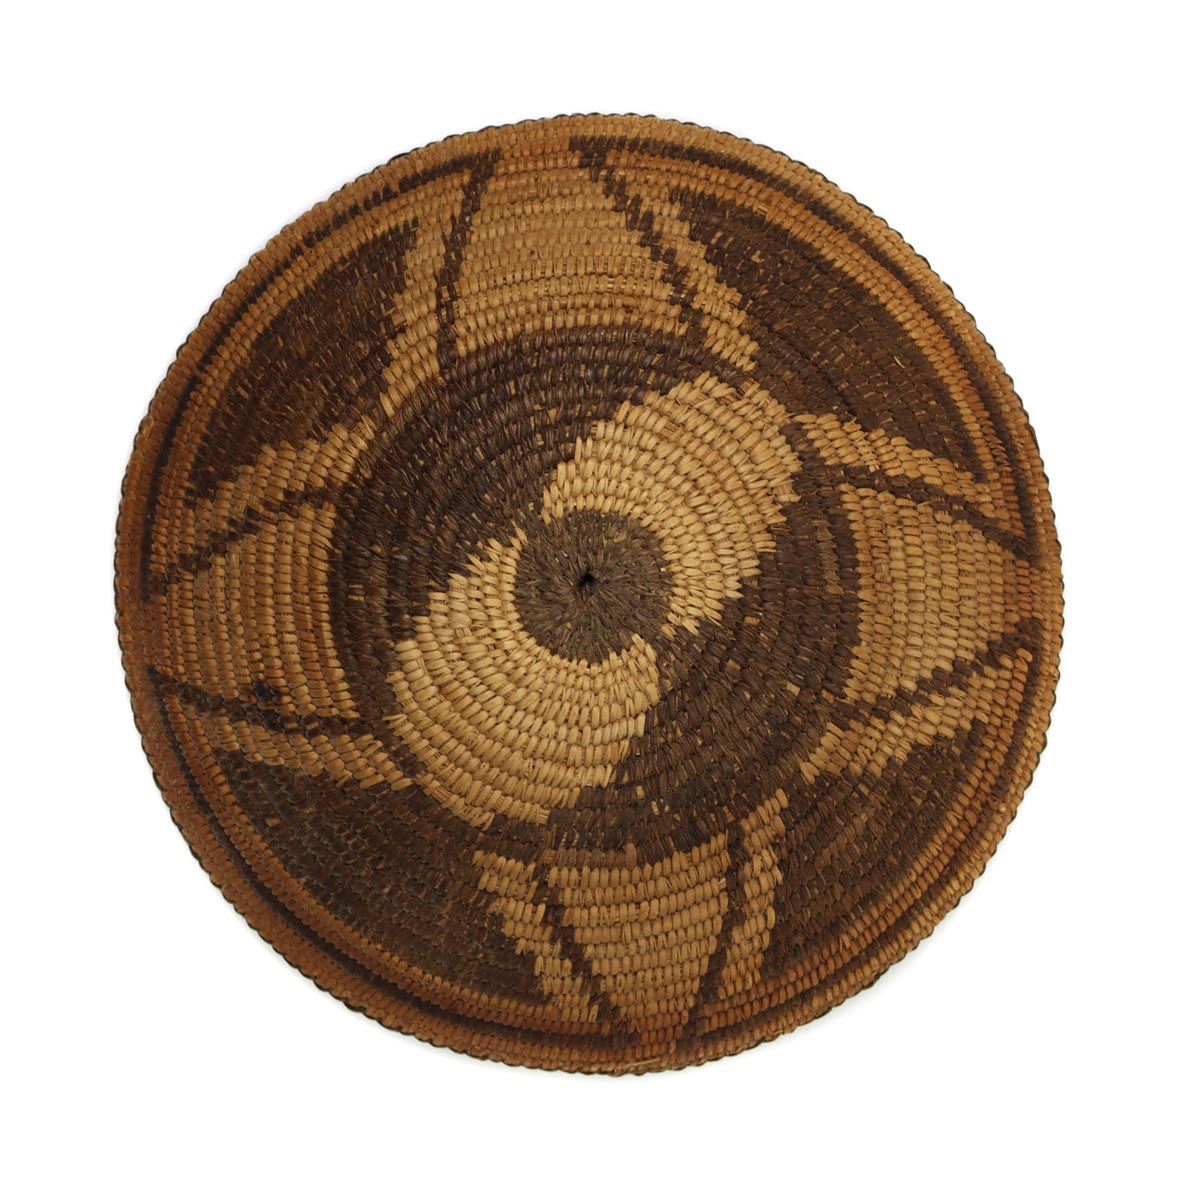 Apache Basket with Geometric Design c. 1890s, 2" x 8.25" (SK3278) 1